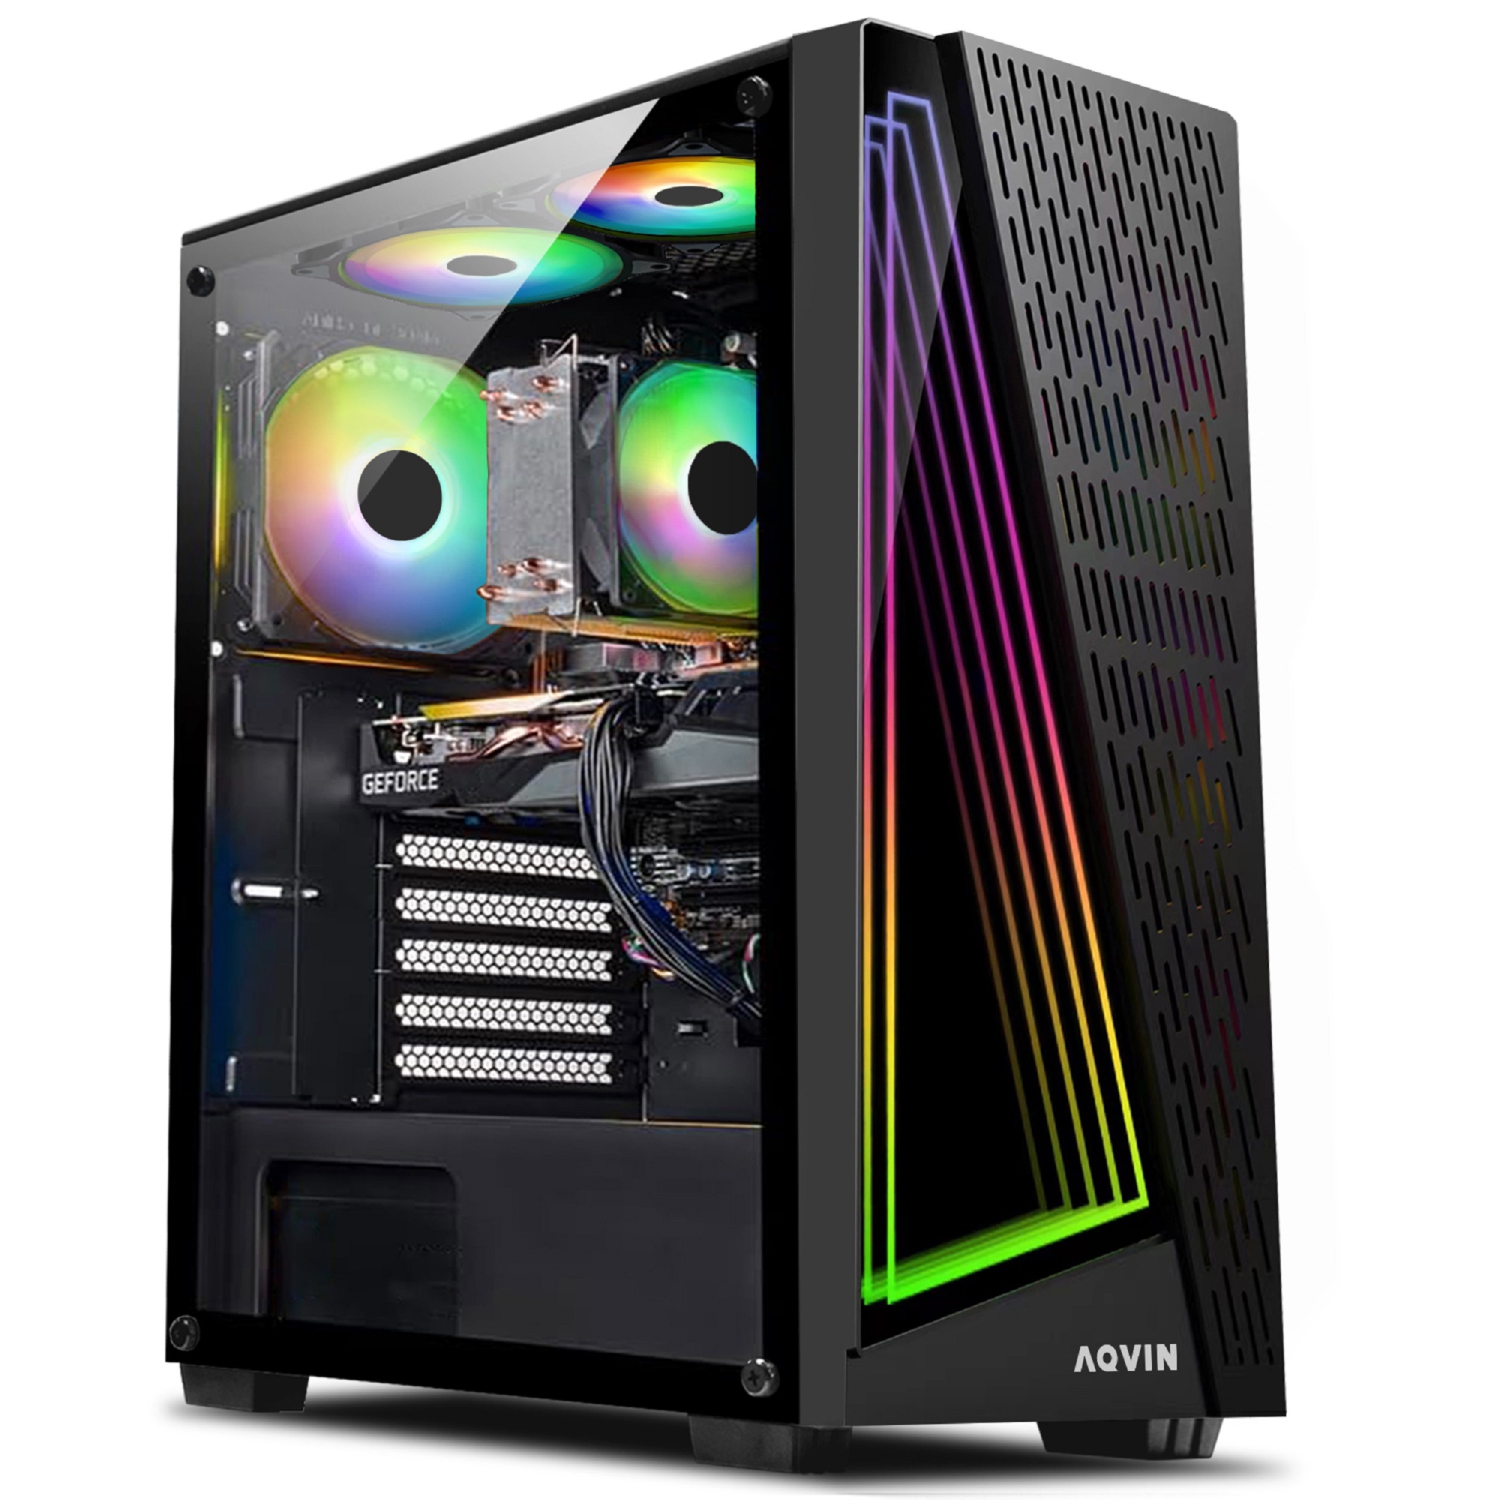 AQVIN AQ50 Gaming Desktop Computer Tower PC, GeForce GTX 1660 Super 6GB, Intel Core i7 CPU, 32GB DDR4 RAM, New 1TB SSD, WIN 10 Pro, WIFI Ready + Bluetooth, RGB Keyboard and Mouse